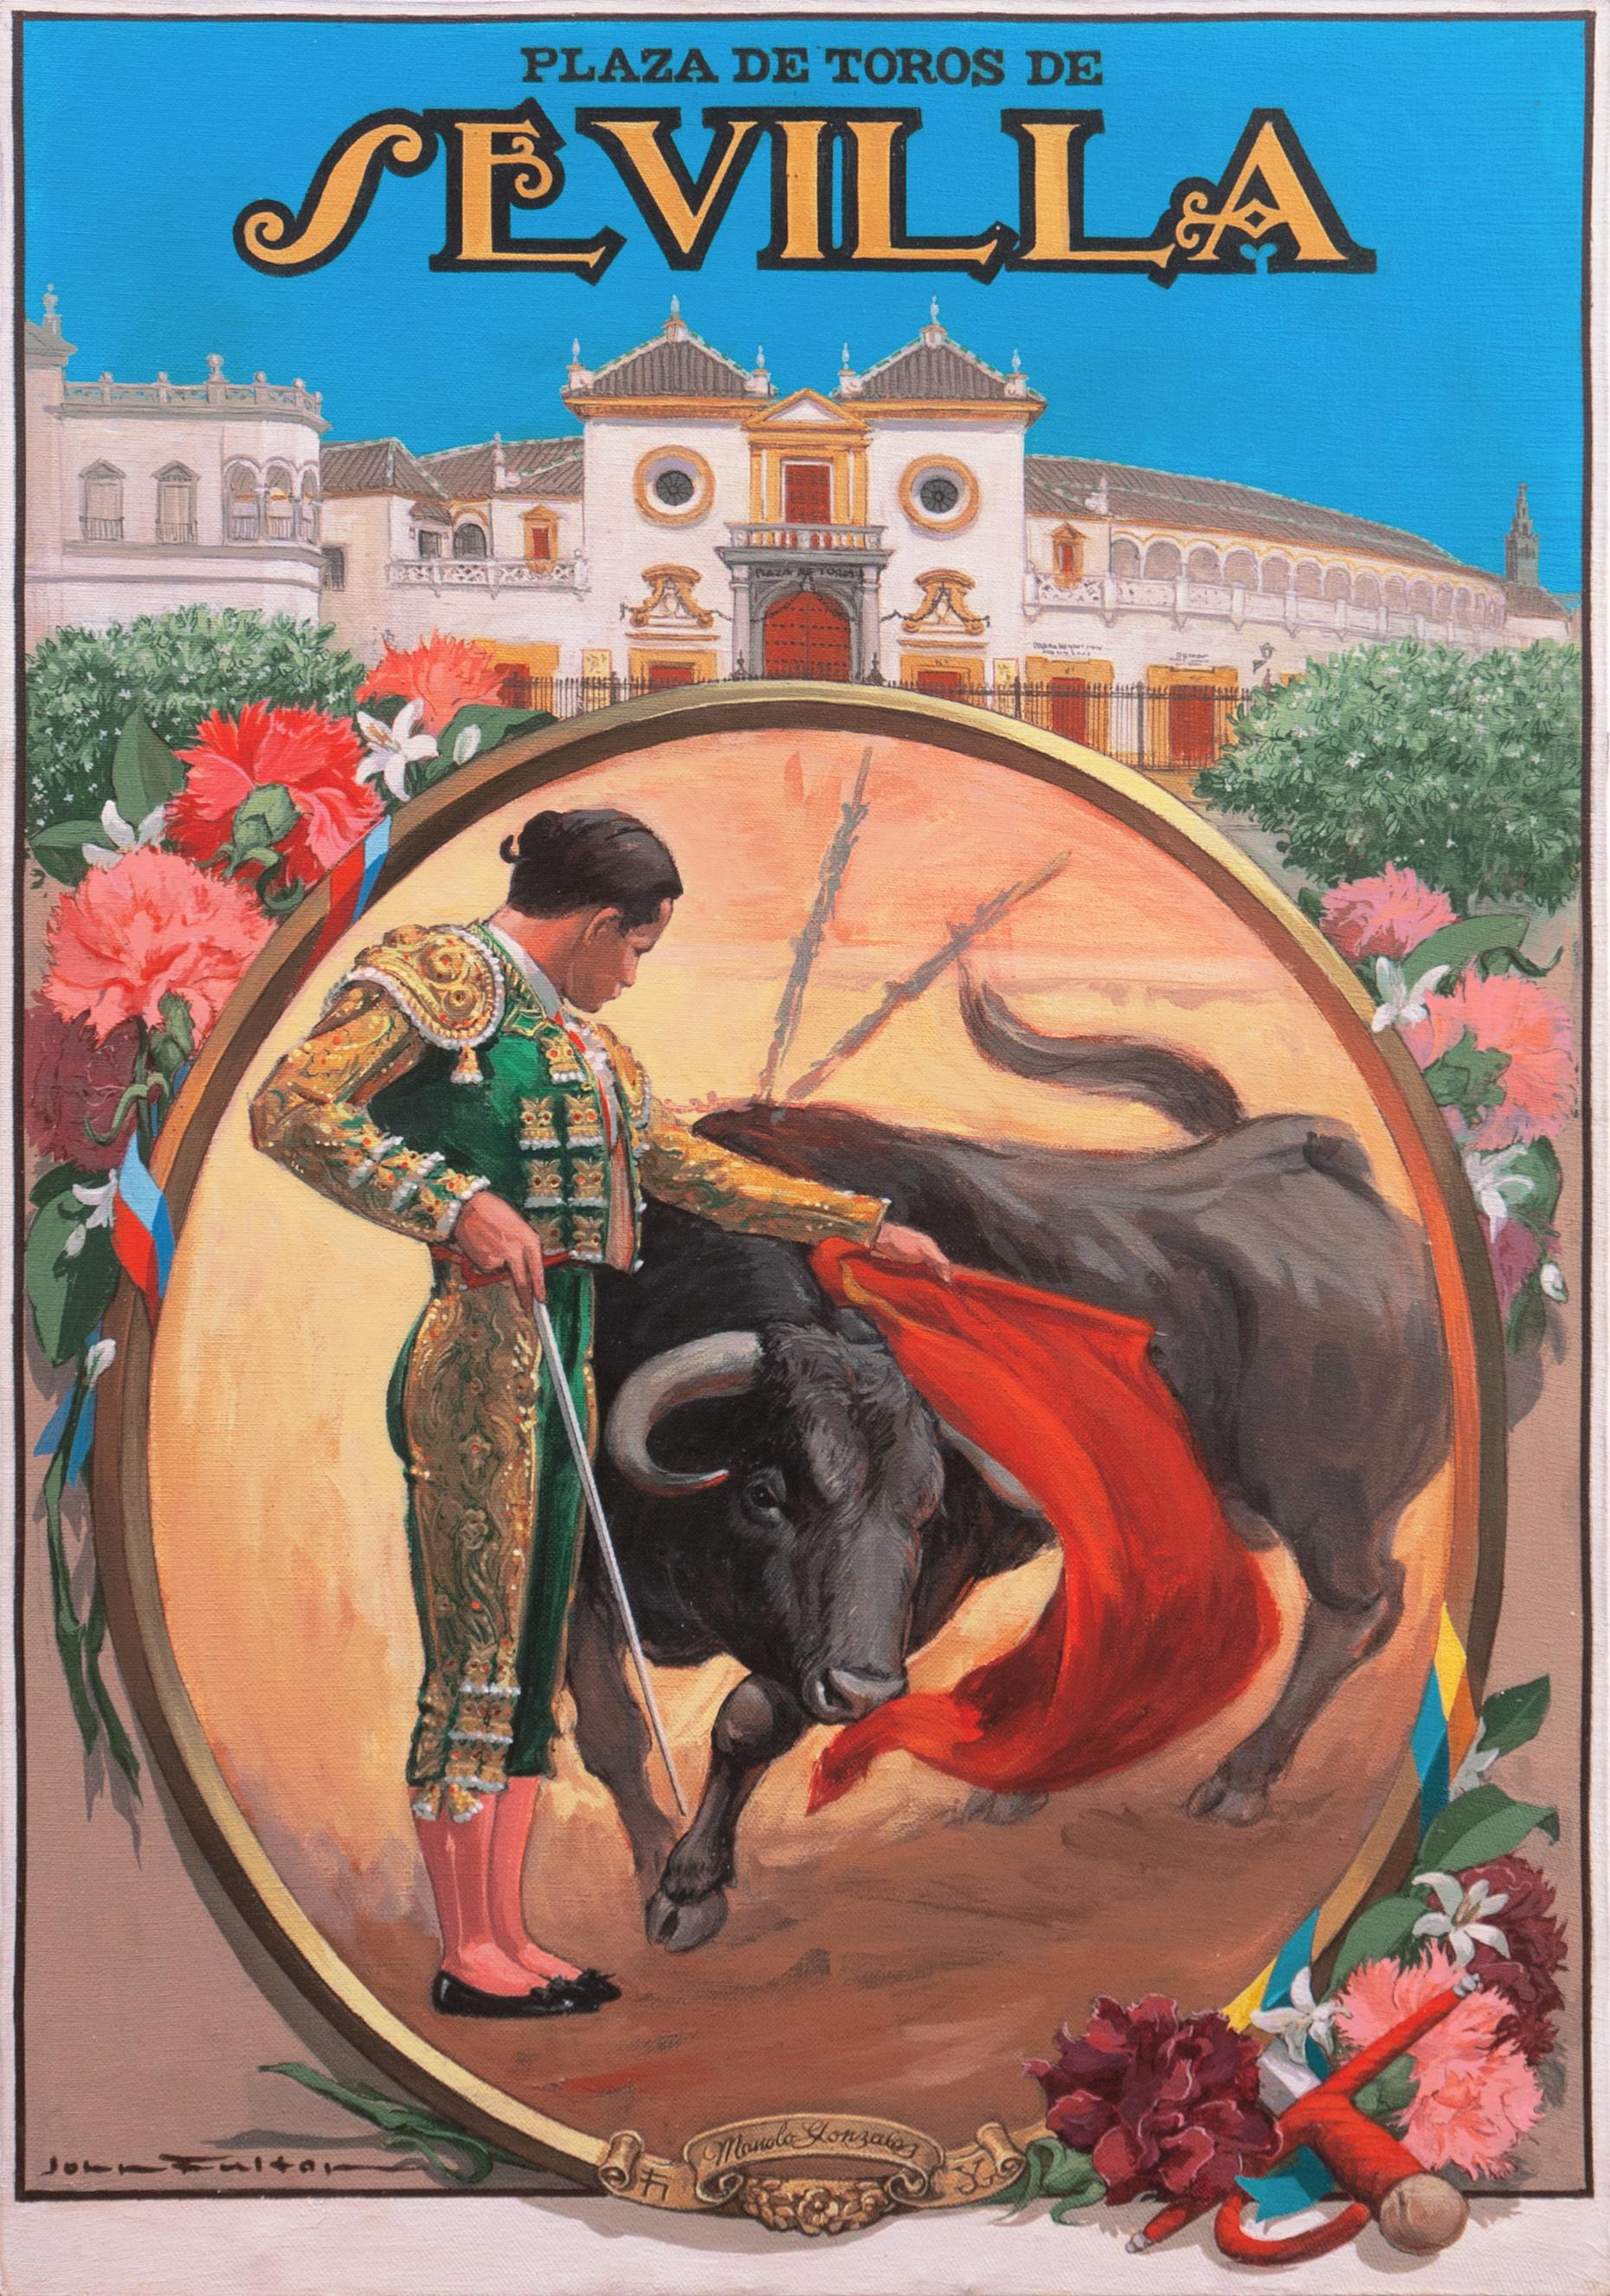 'Manolo Gonzalez' Plaza de Toros, Maestranza, Seville, Bullfighting, Matador